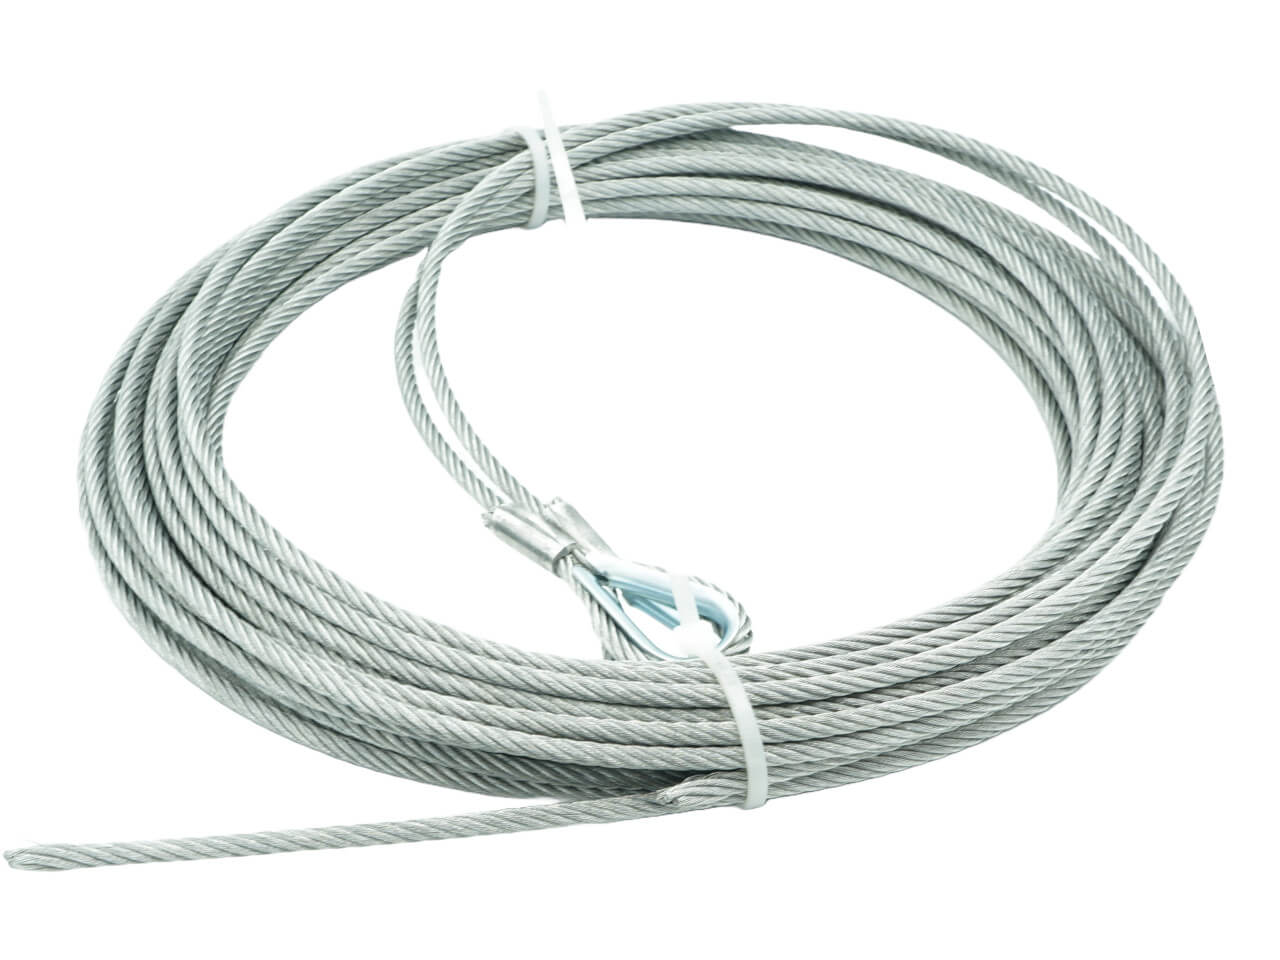 Cable Diameter 4,0mm Length 14m